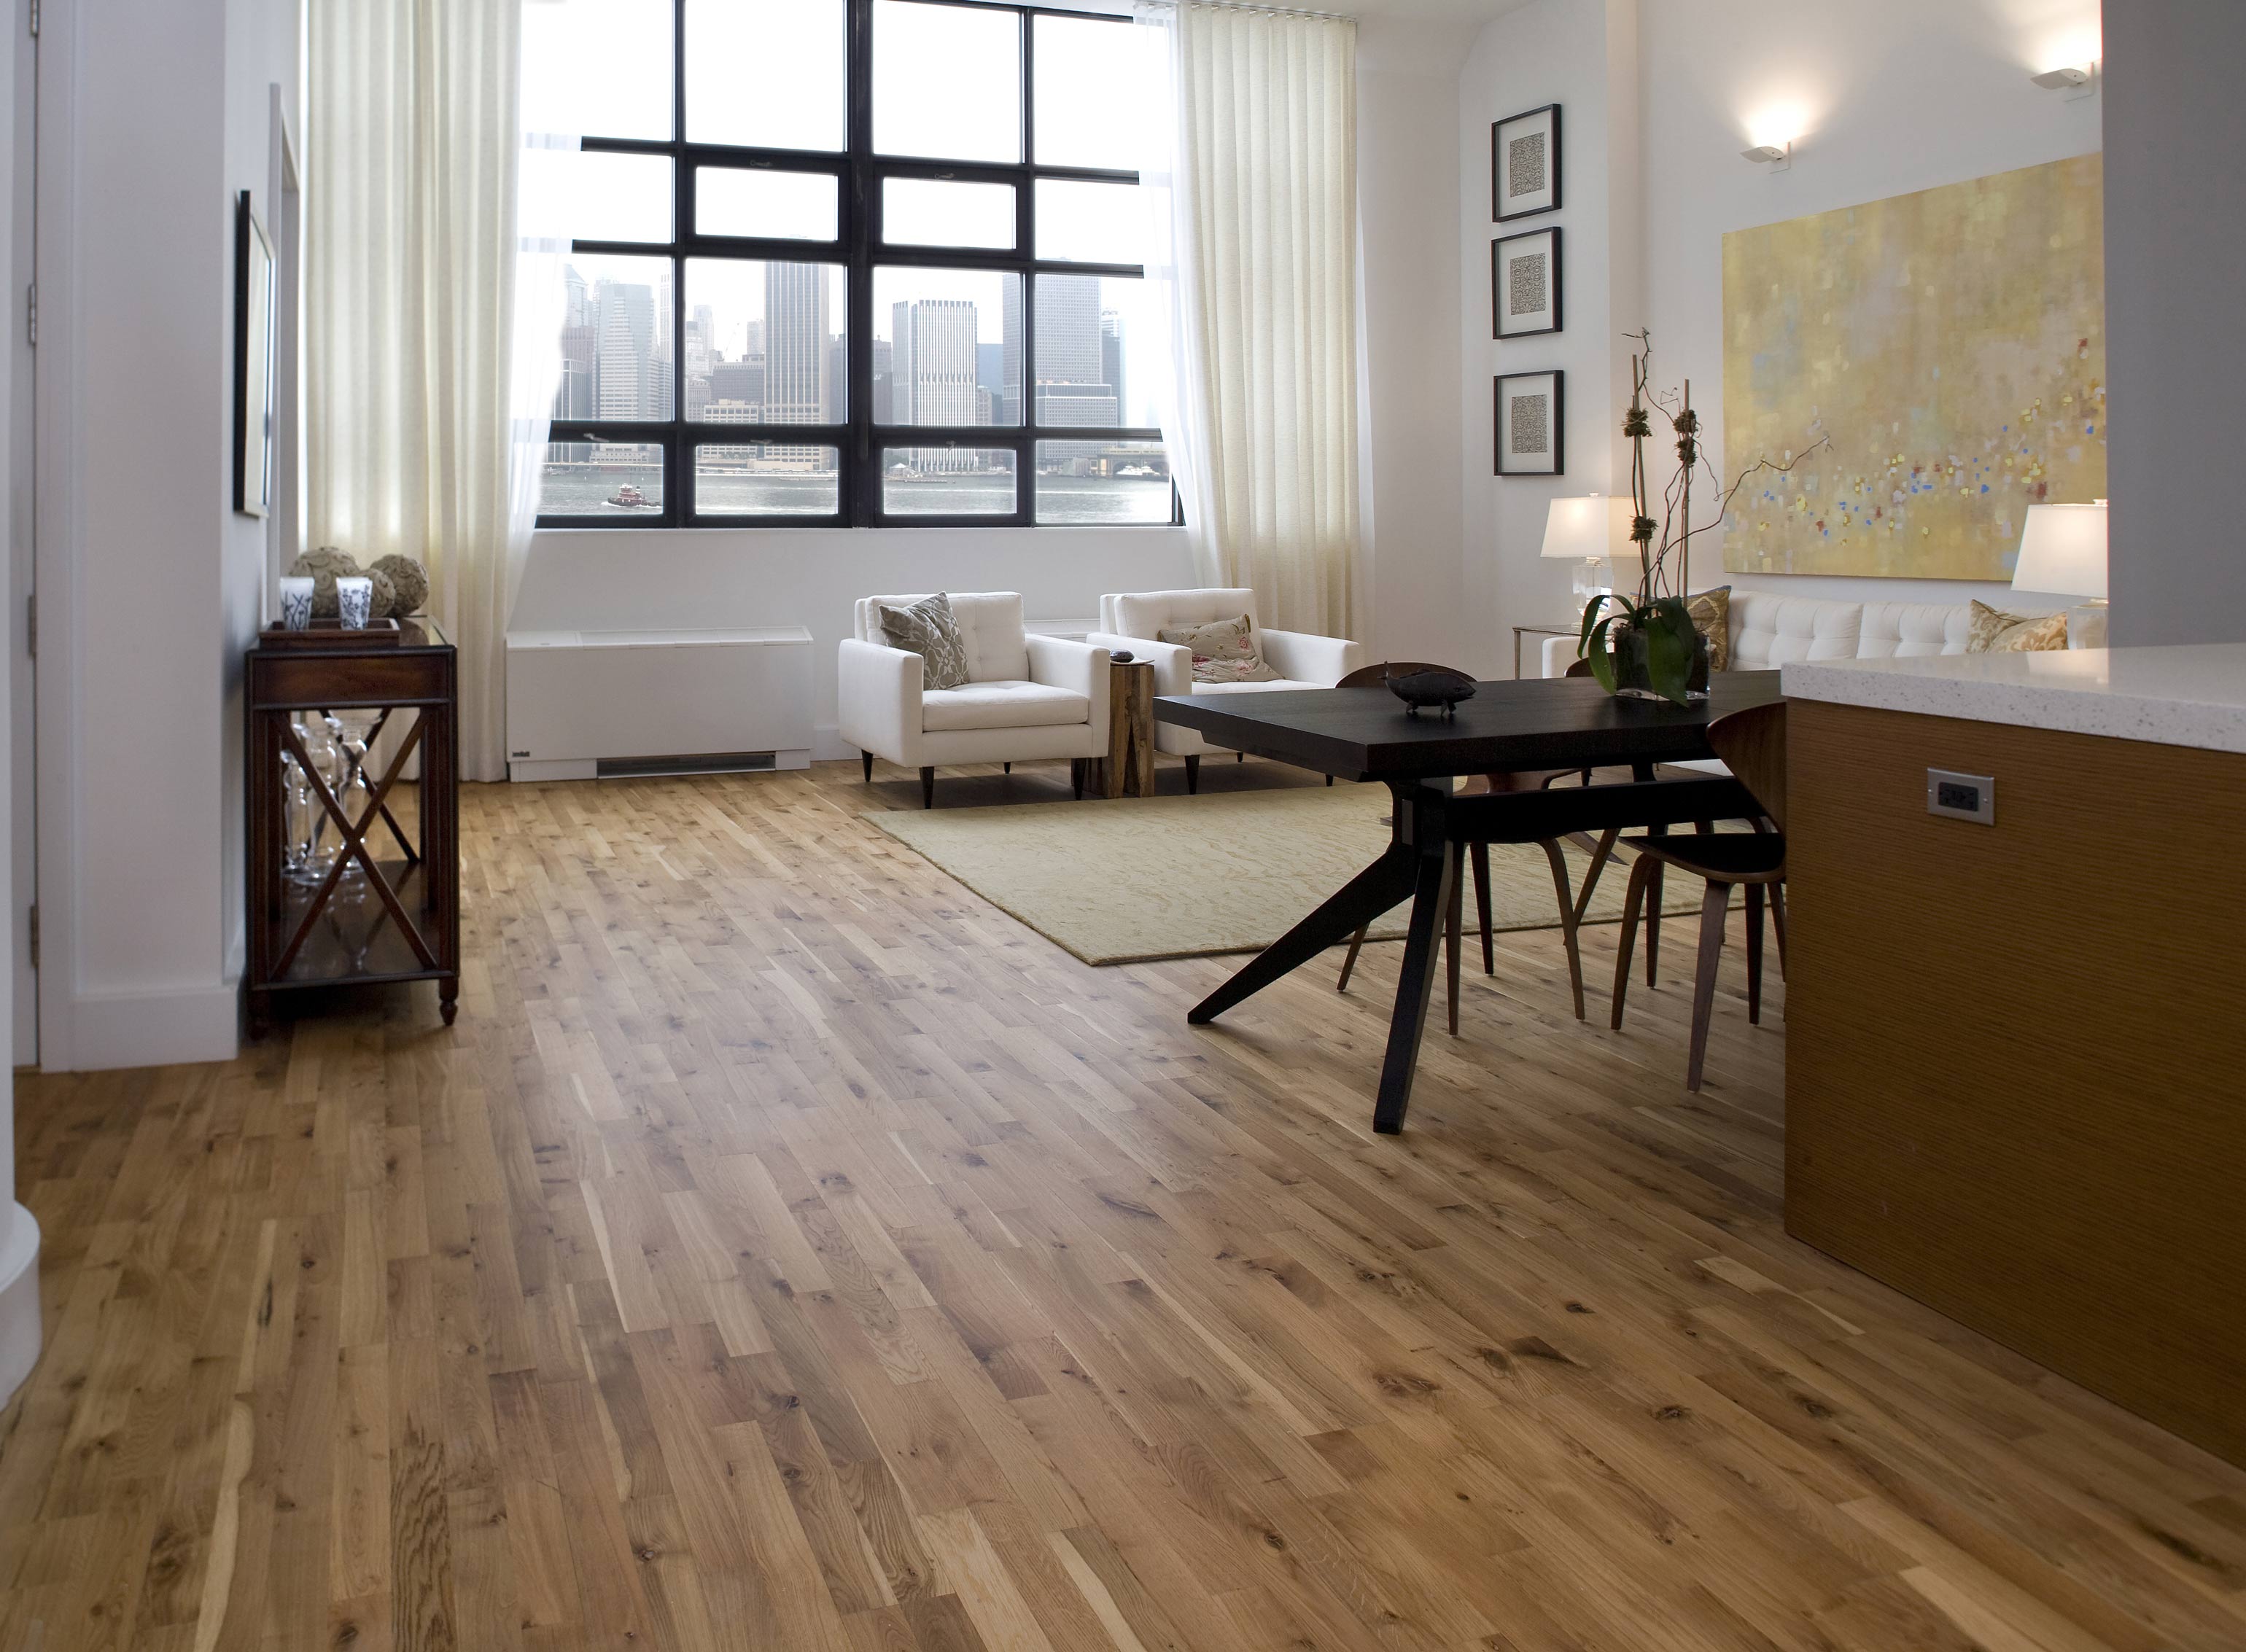 Best Flooring Options for Living Room | Roy Home Design
 Best Floor Tiles For Living Room